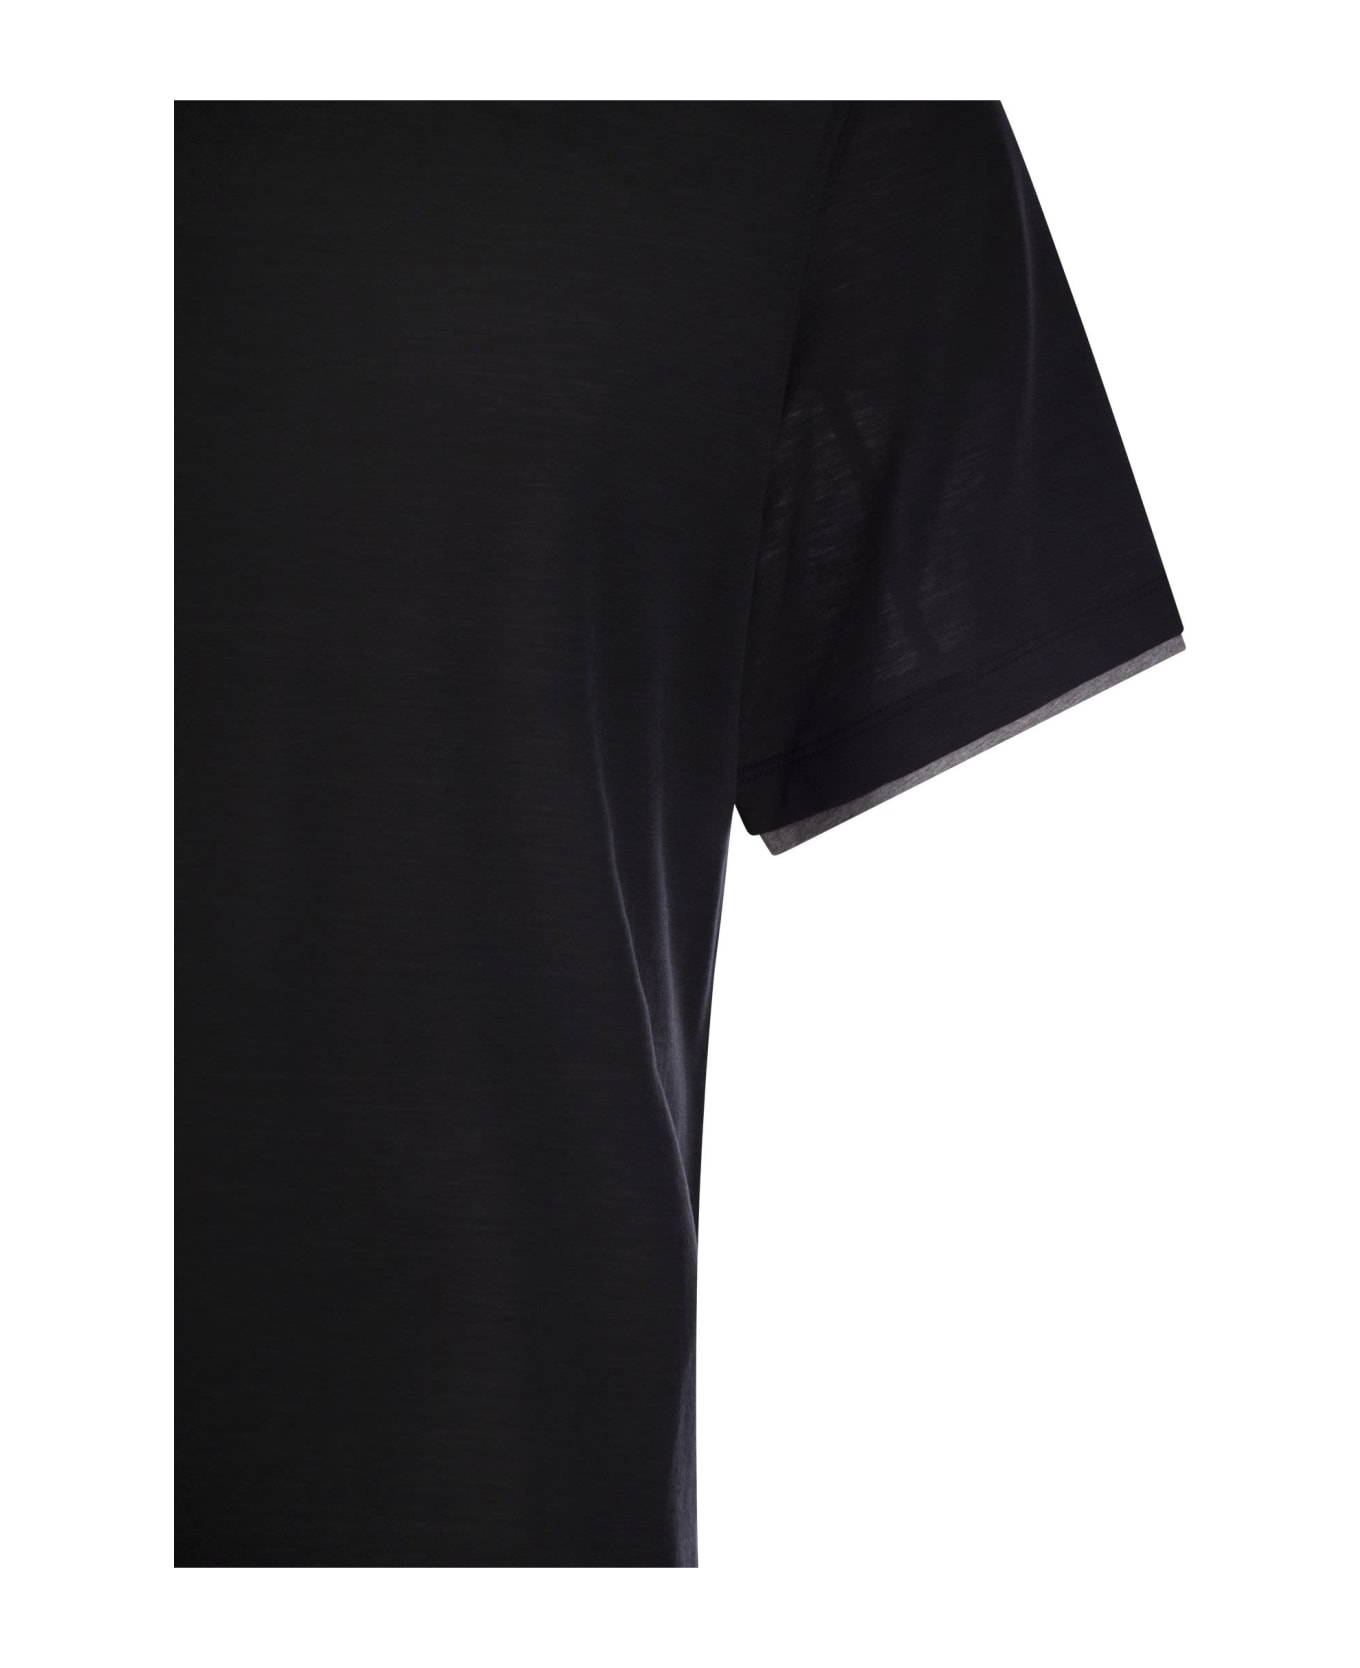 Brunello Cucinelli Silk And Cotton T-shirt - Black